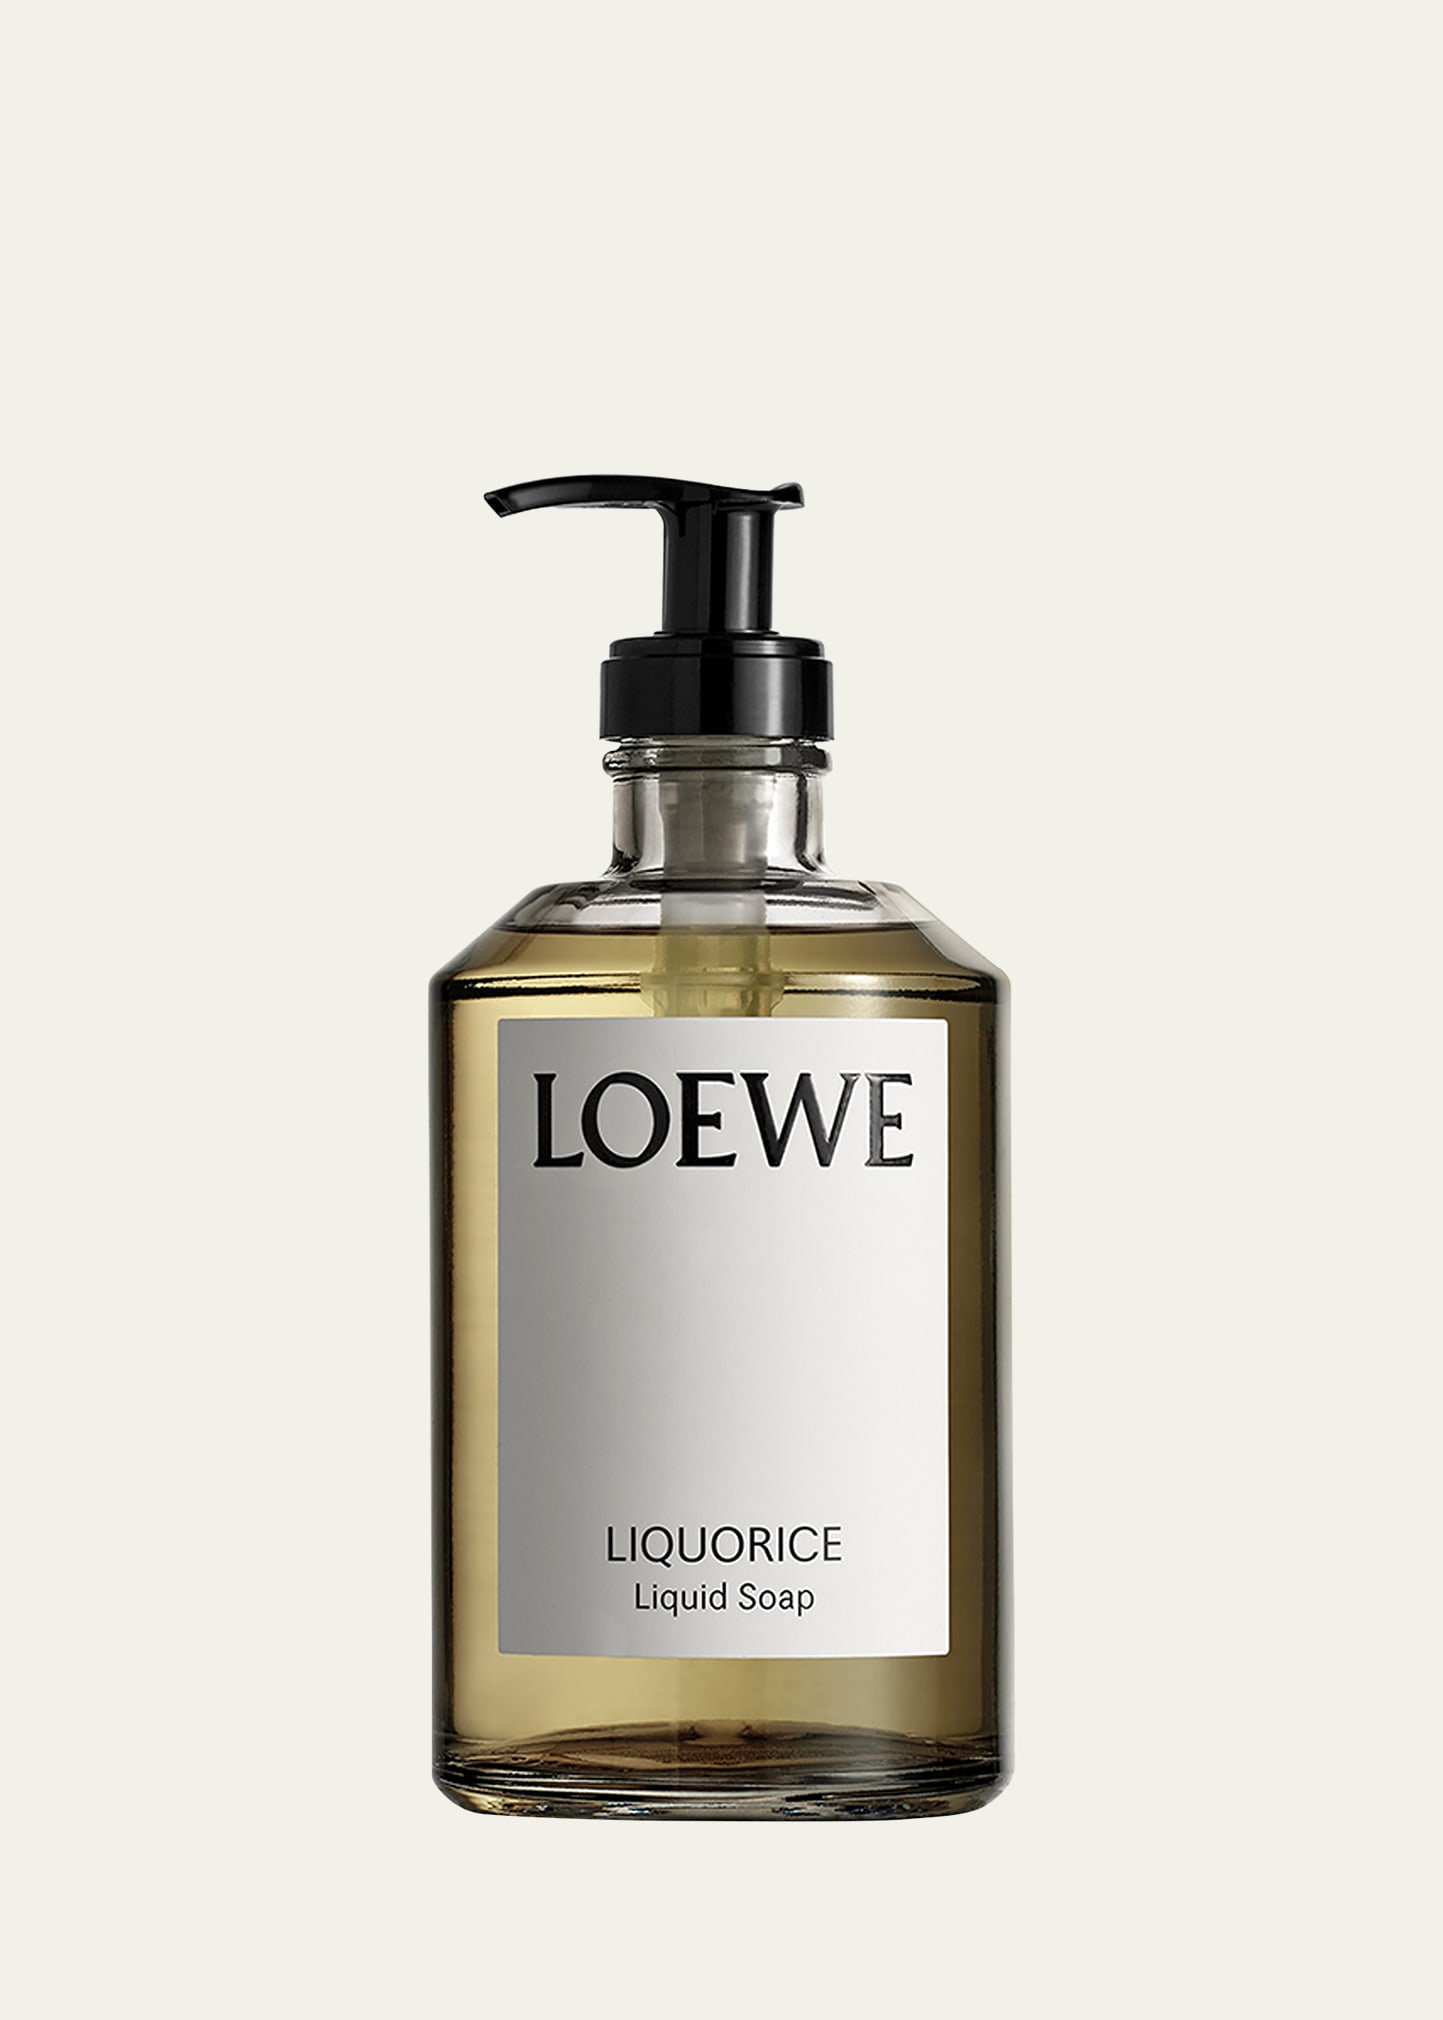 Loewe 12 oz. Liquorice Liquid Soap